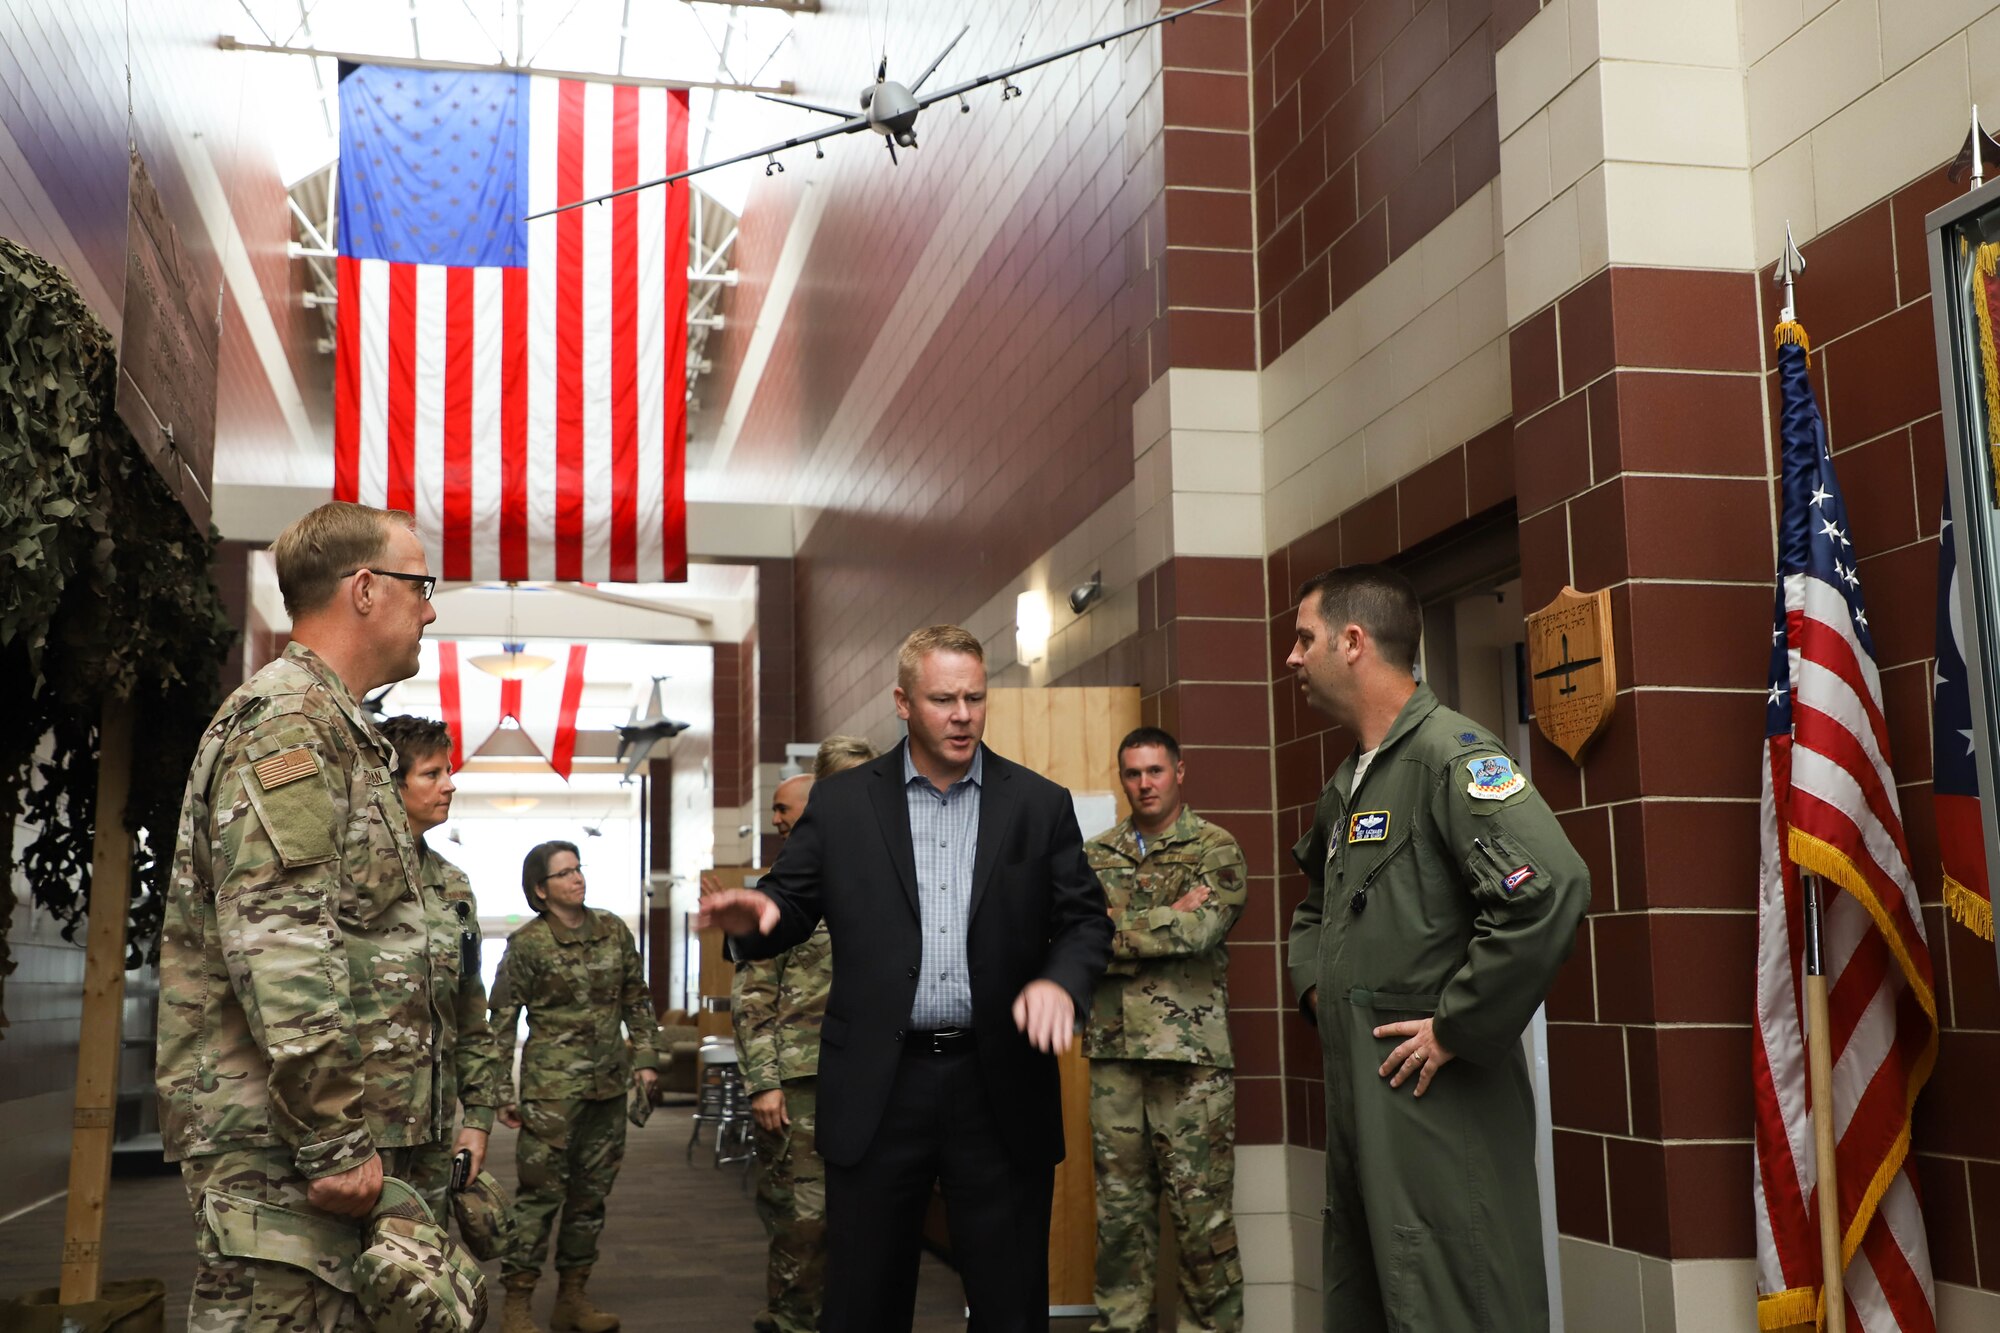 Congressman tours military base